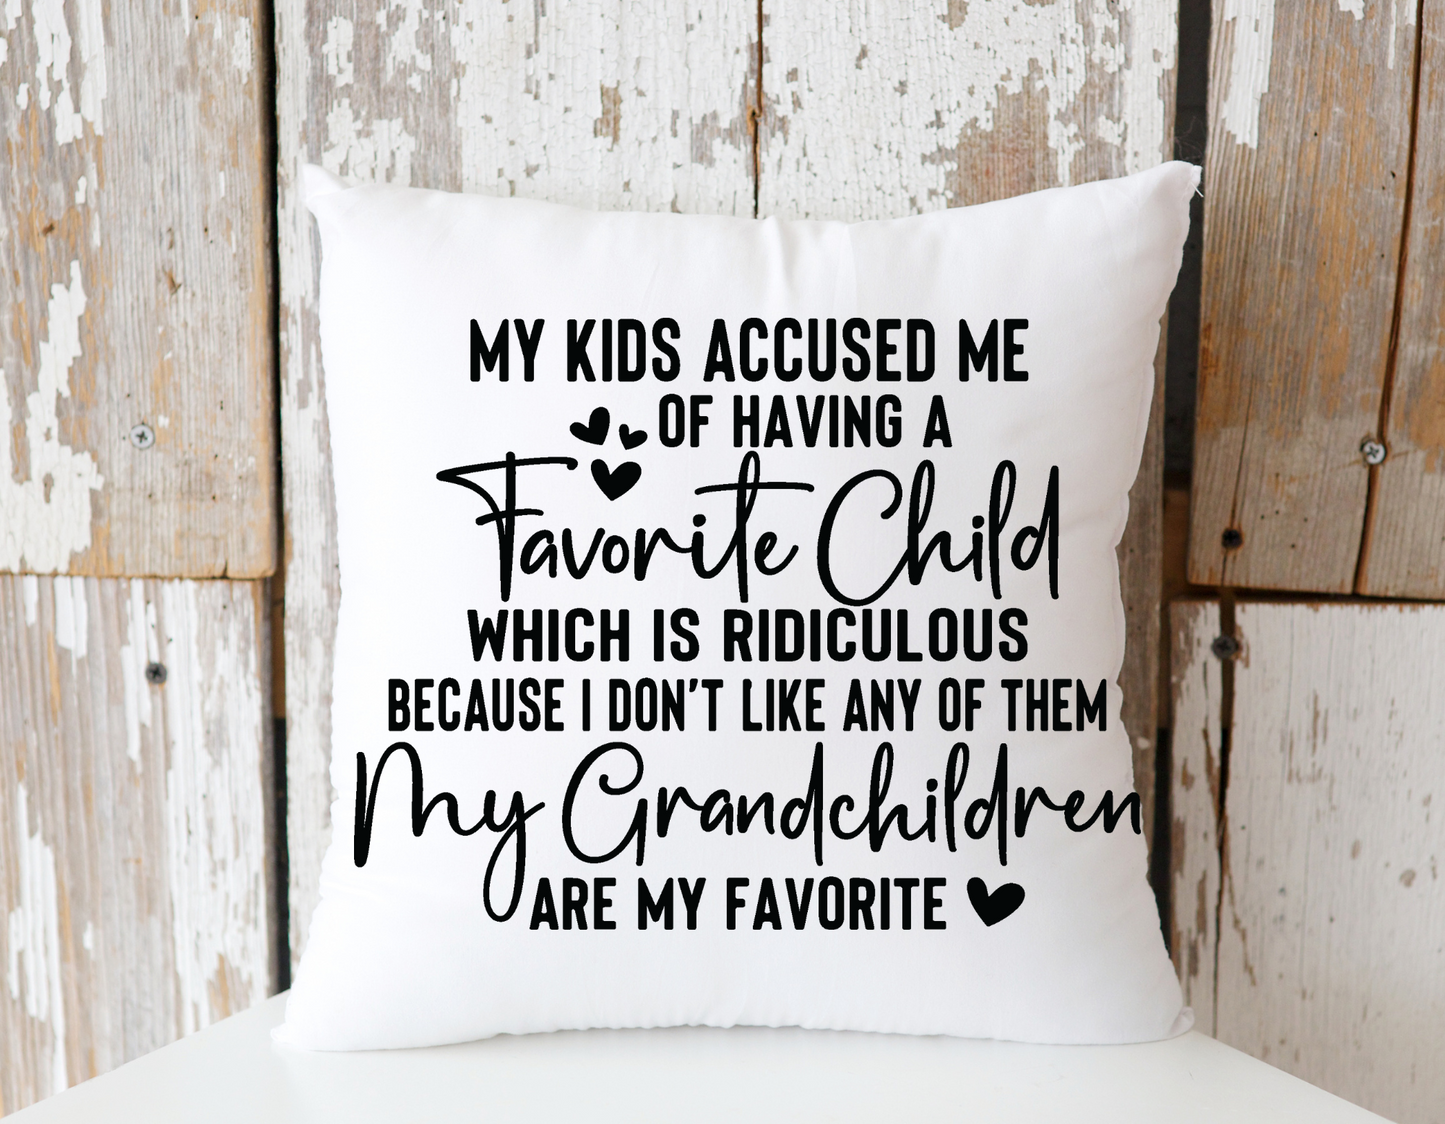 Favorite Child Pillow